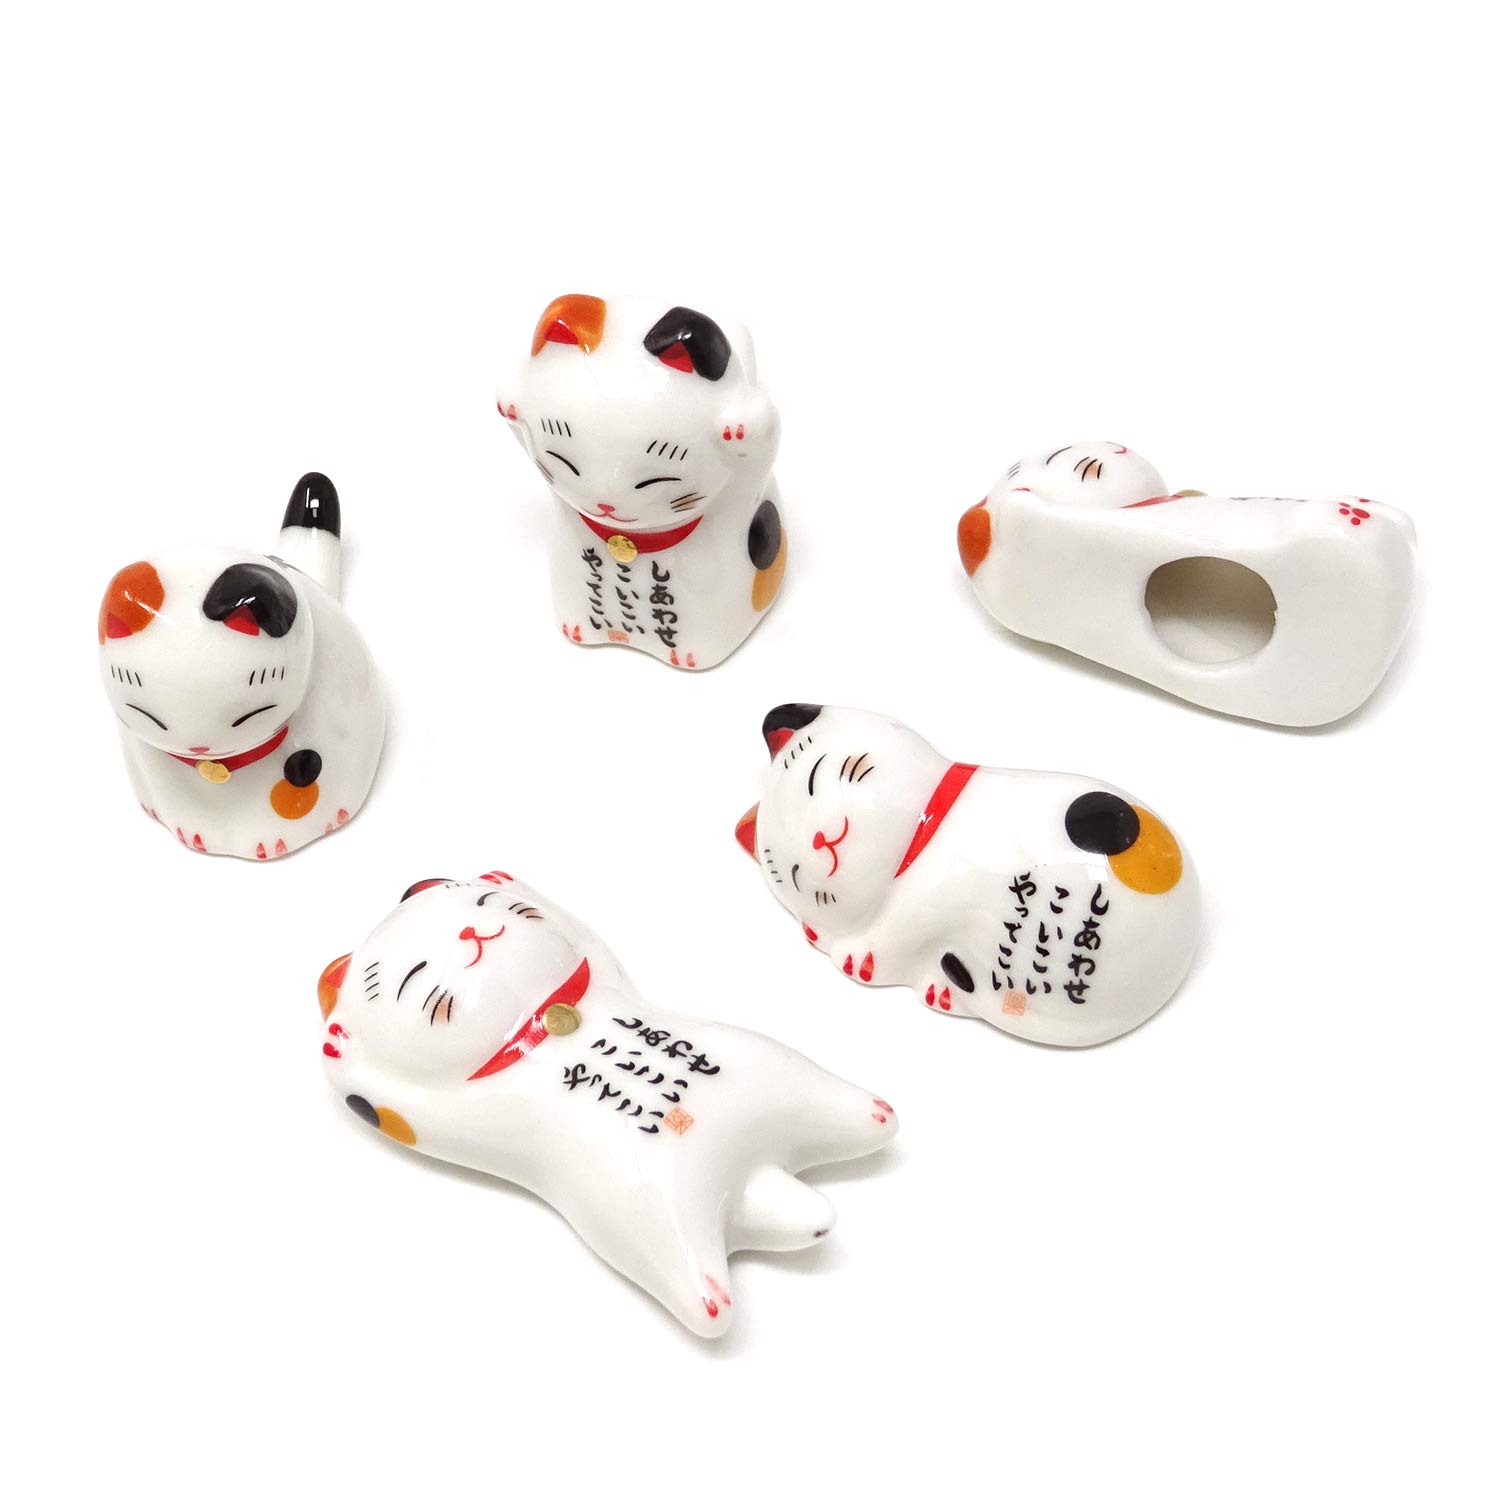 Honbay 5PCS Cute Ceramic Lucky Cat Chopsticks Rest Rack Stand Holder for Chopsticks, Forks, Spoons, Knives, Paint Brushes